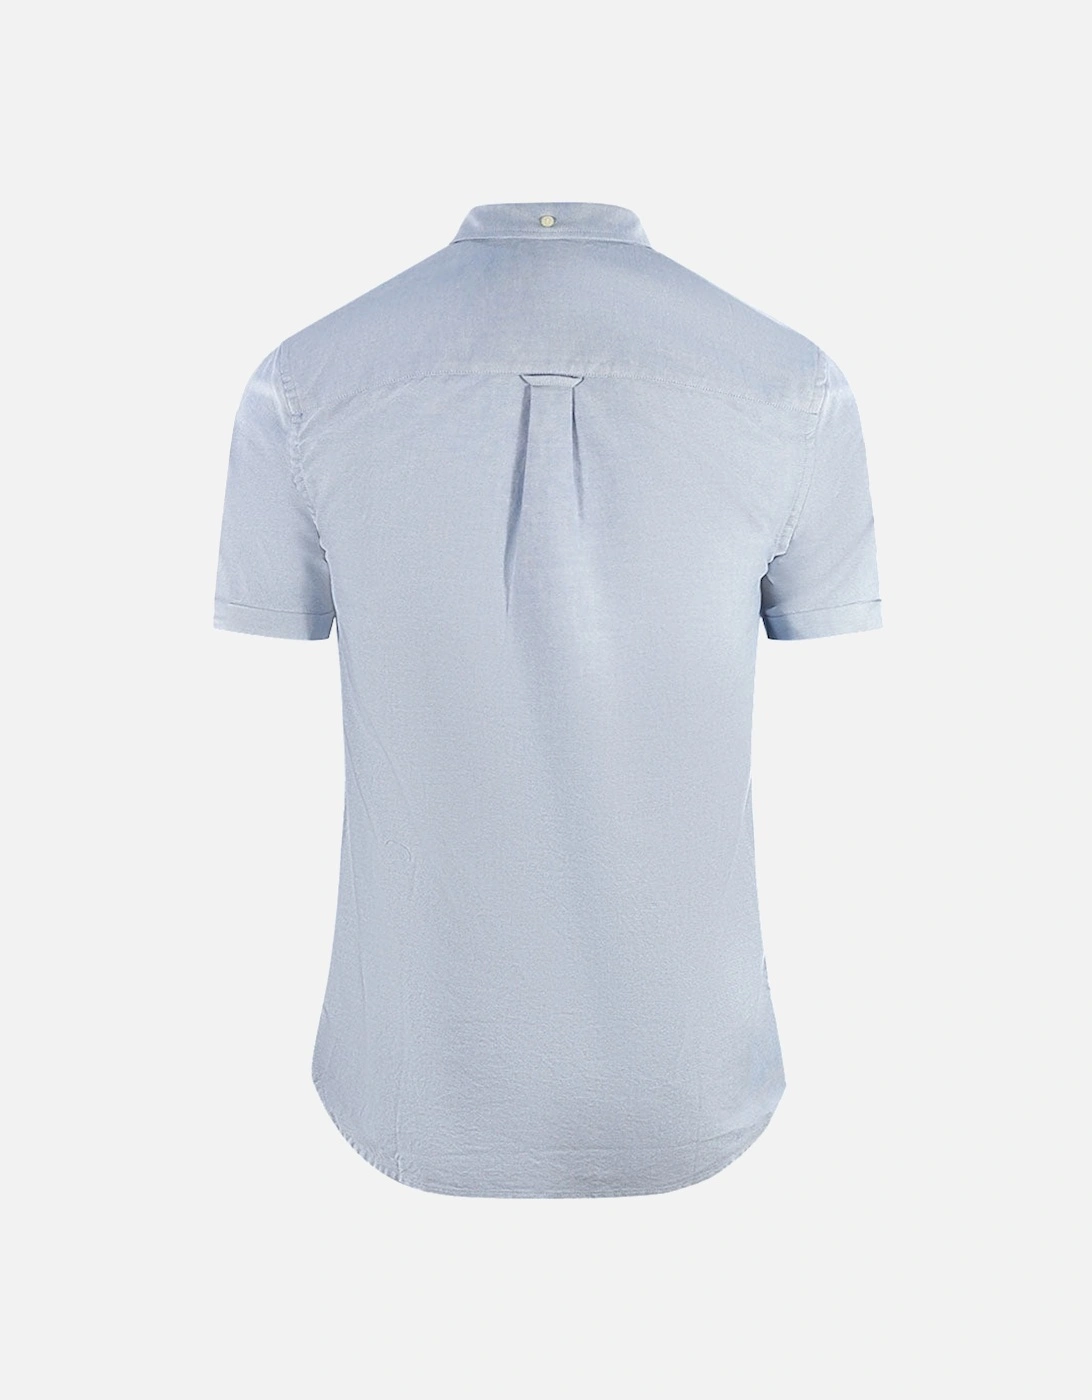 Lyle & Scott Blue Short Sleeved Casual Oxford Shirt